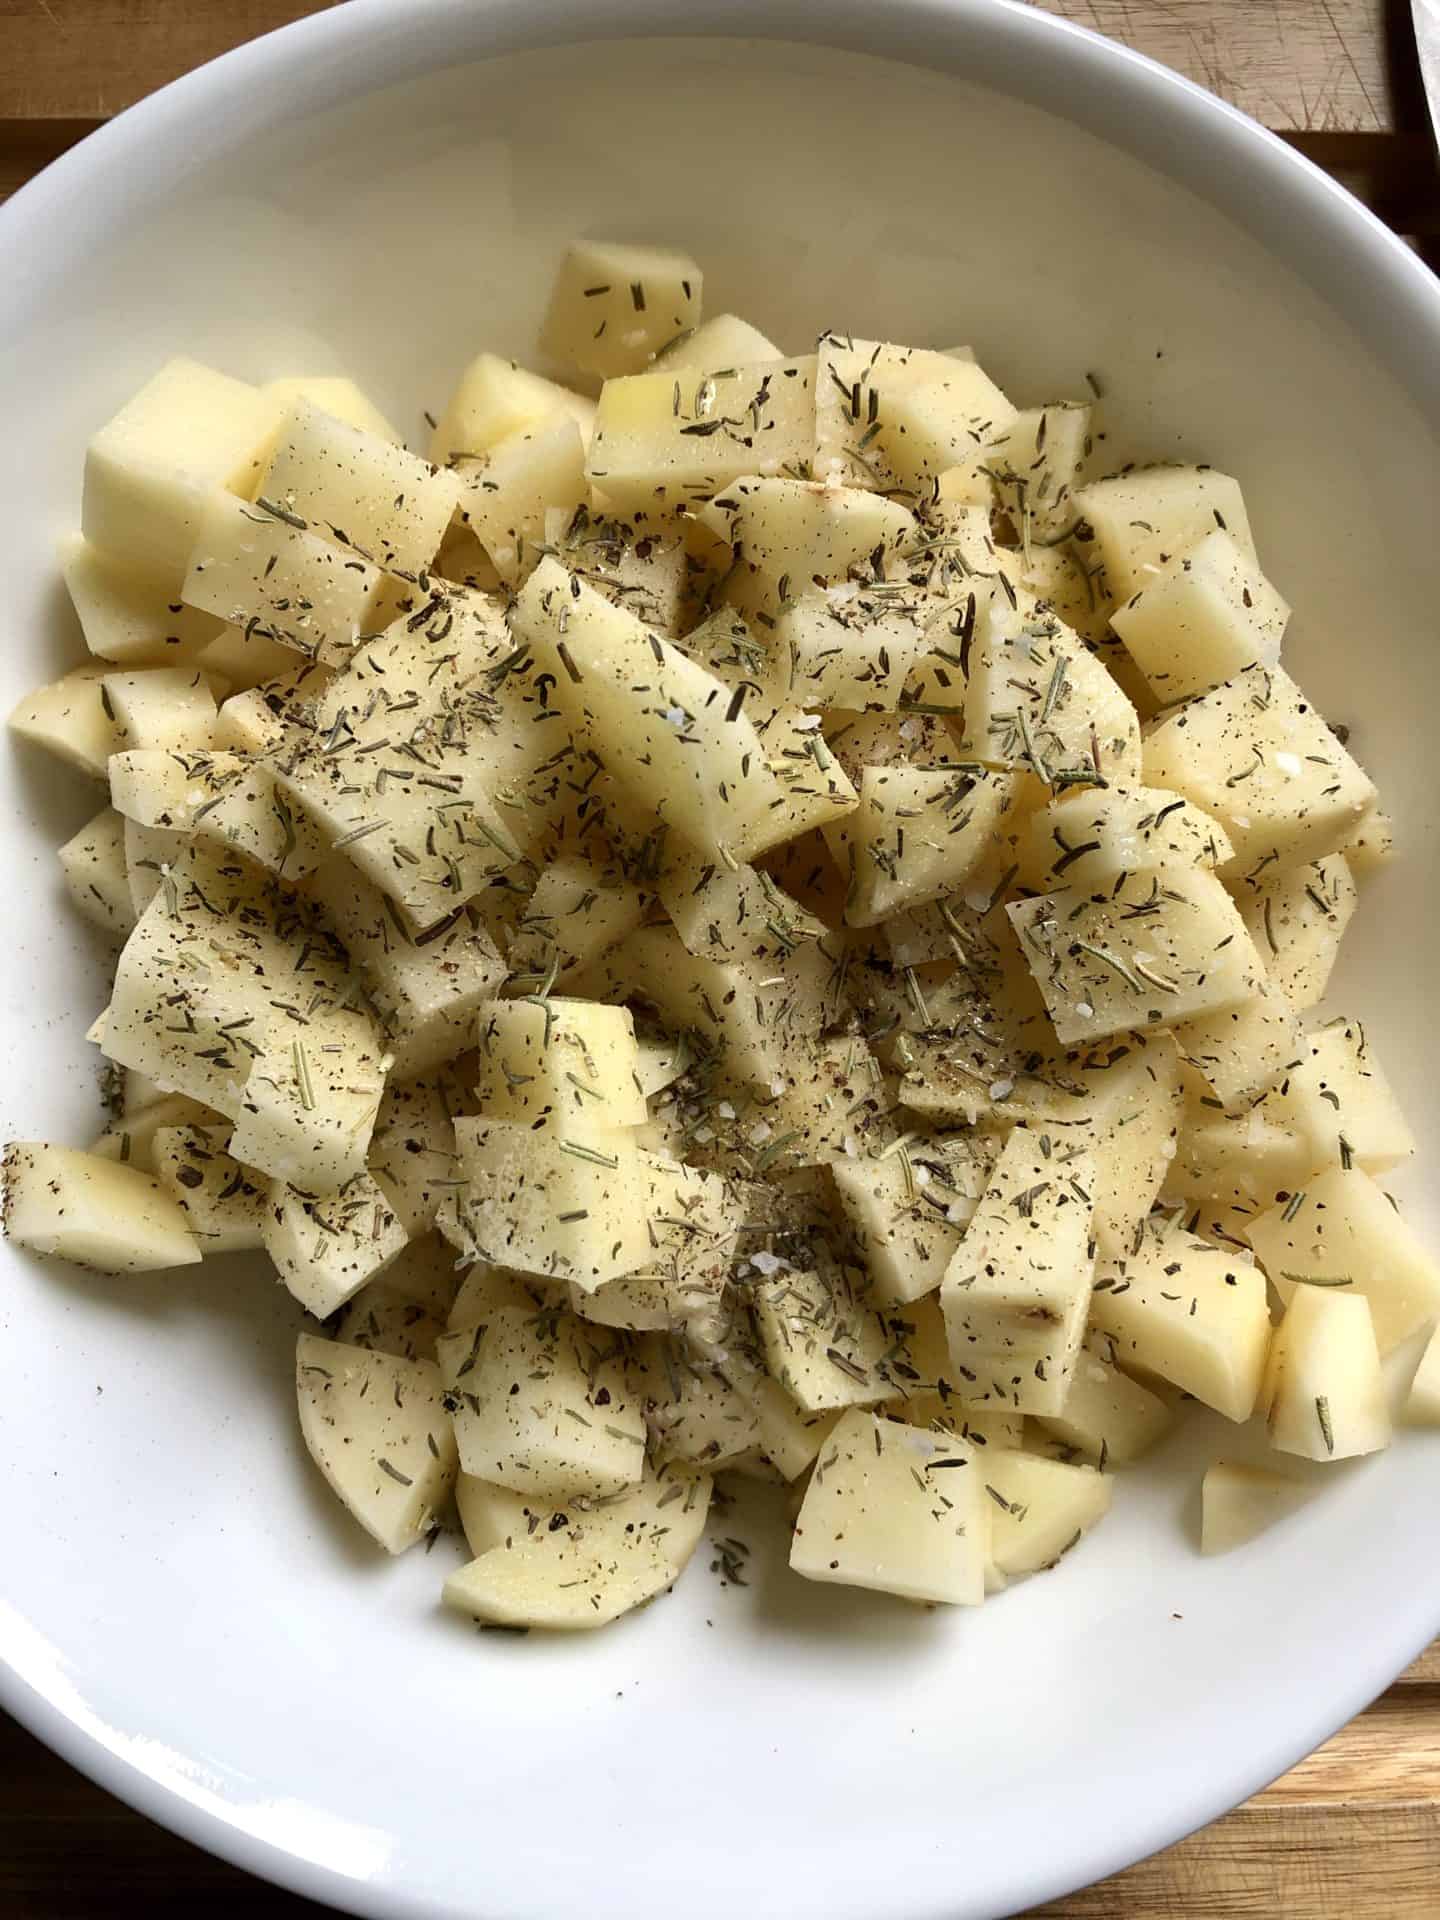 diced potatoes in bowl with seasonings